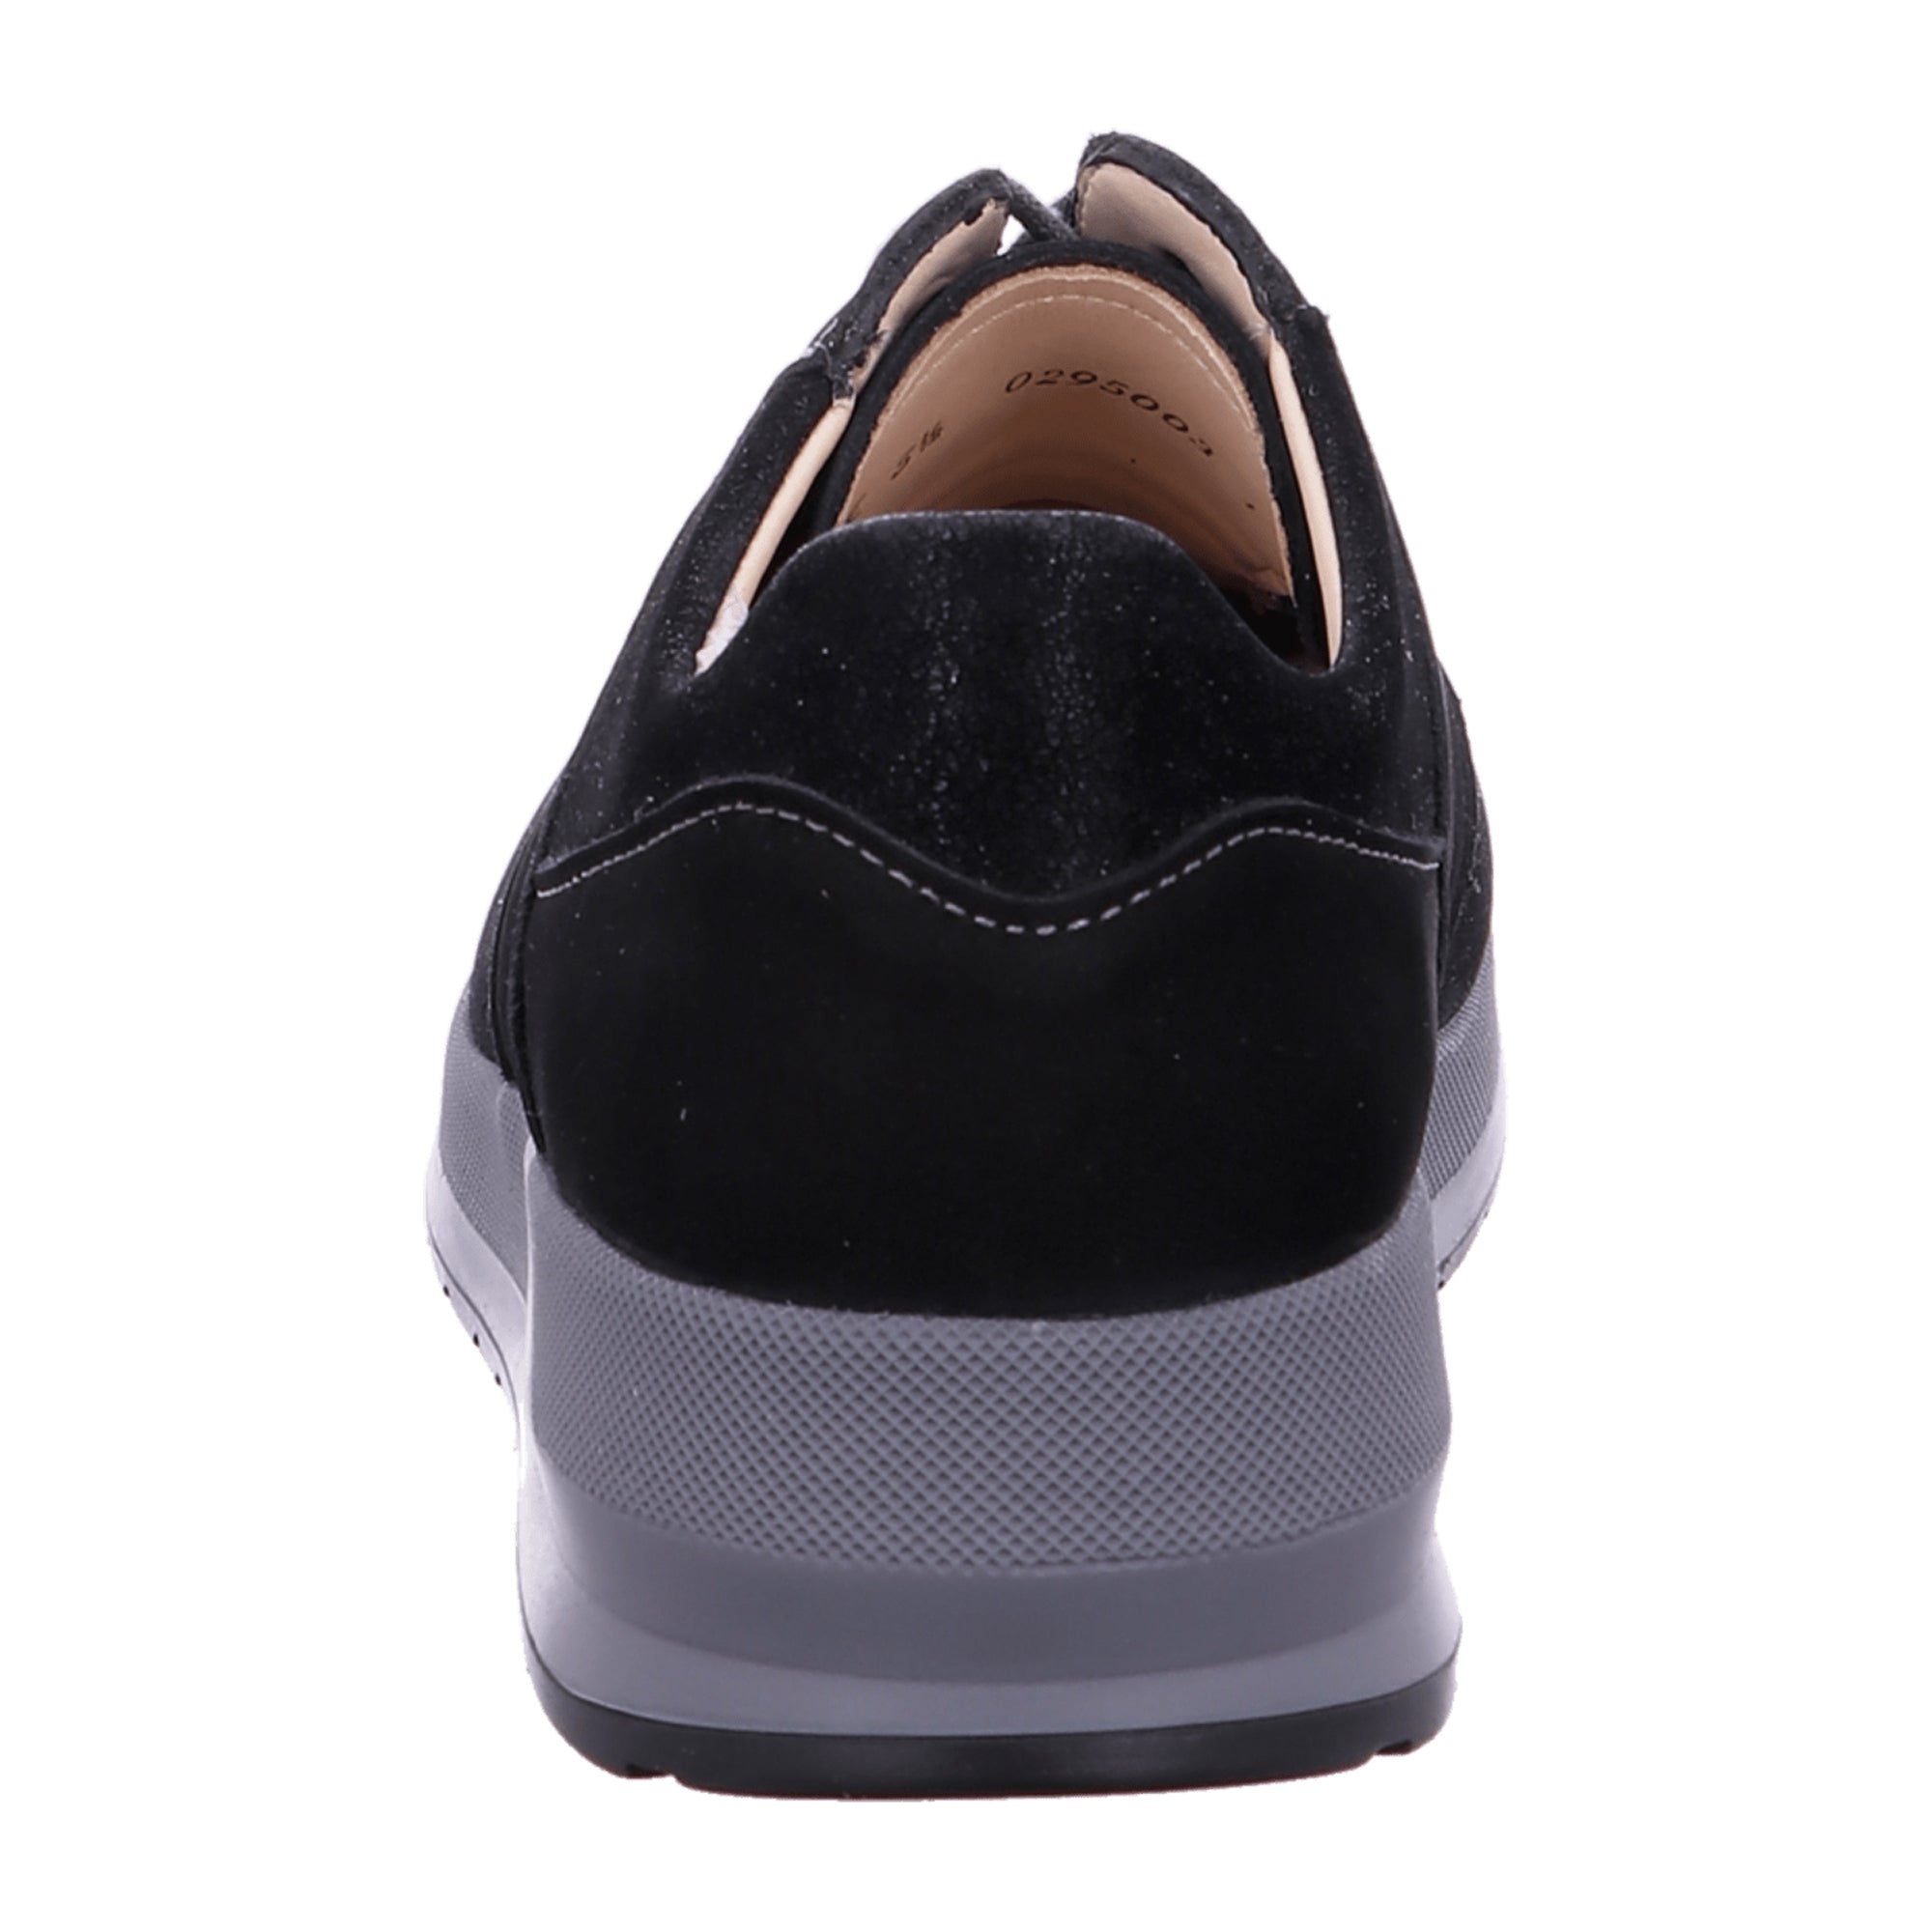 Finn Comfort Caino Women's Orthopedic Comfort Shoes, Sleek Black